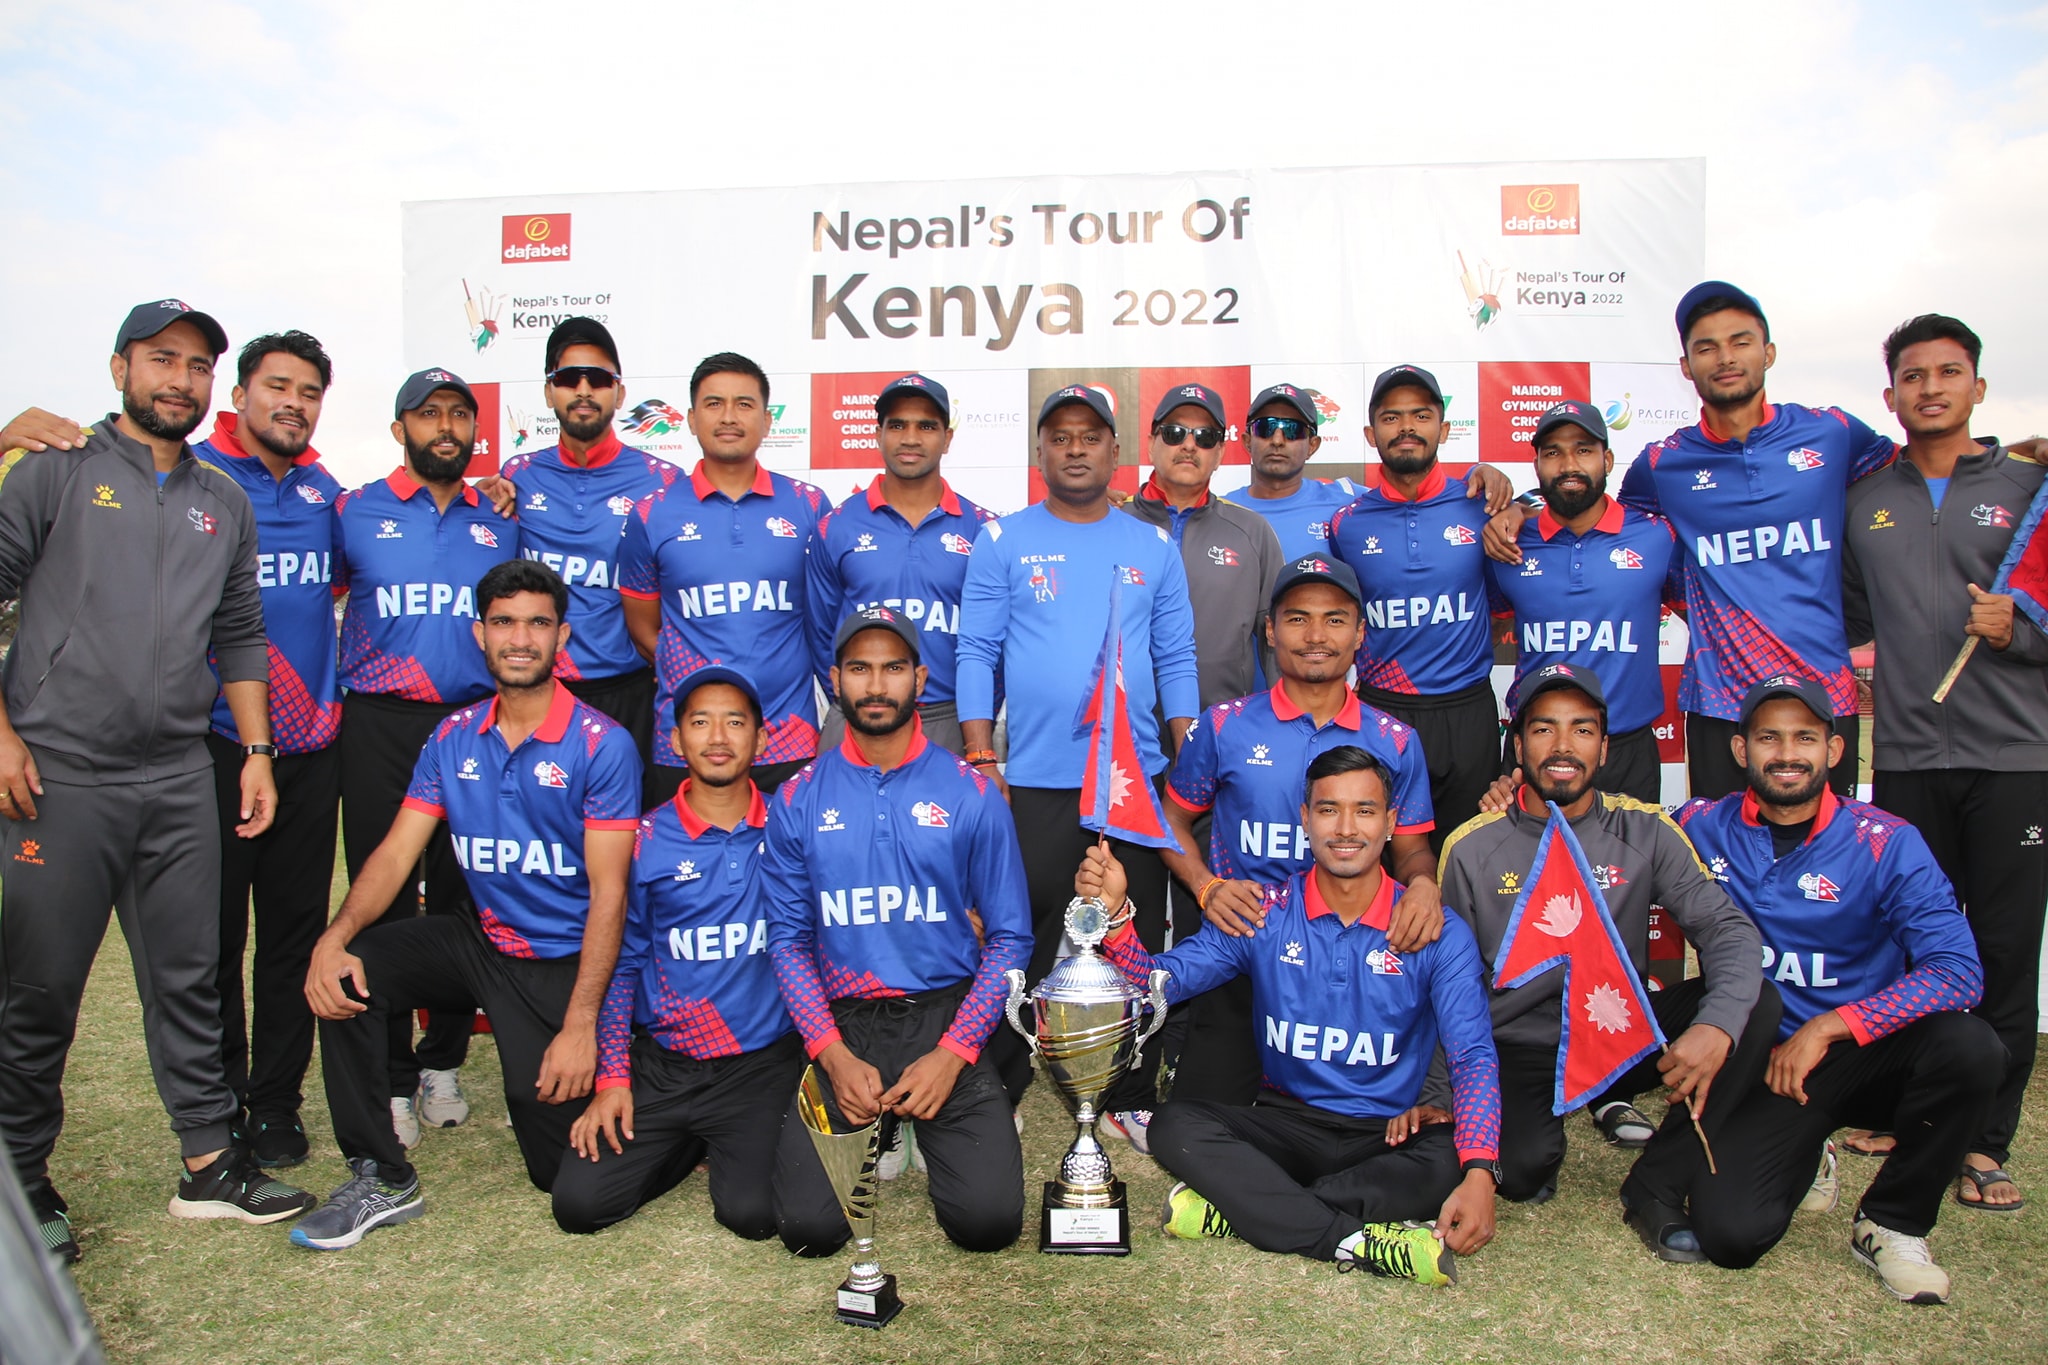 Nepal records a clean sweep against Kenya in ODI series